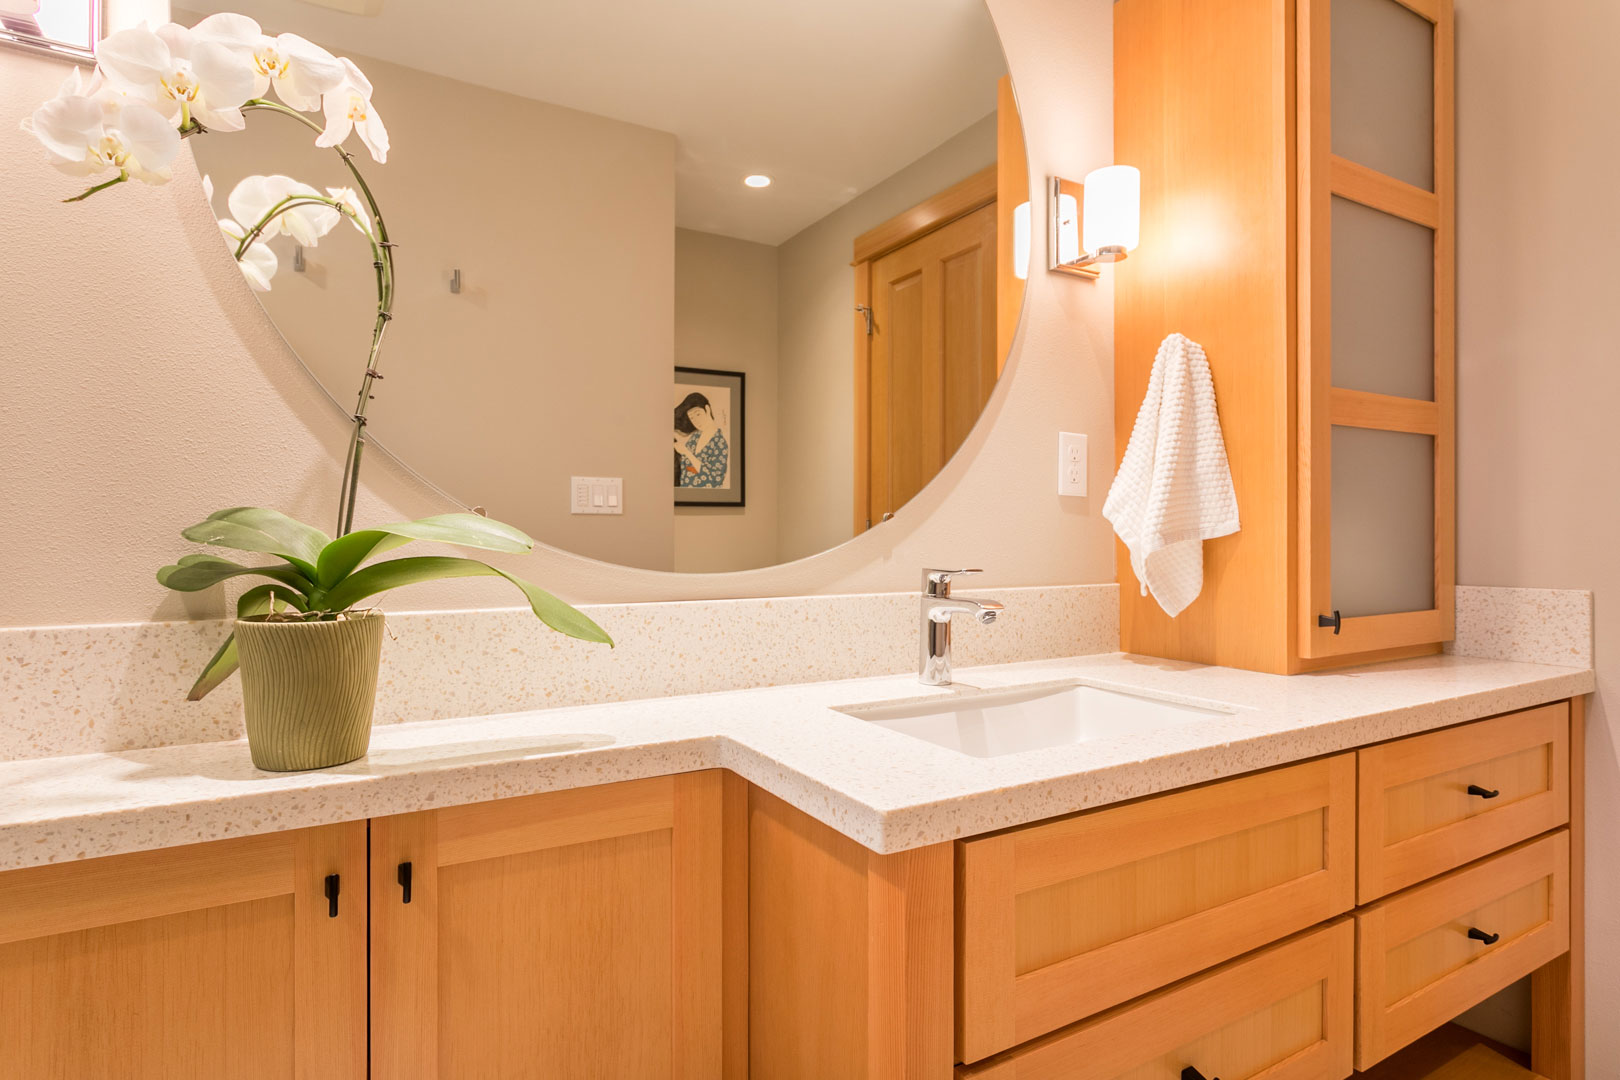 jack and jill updated bathroom remodel - Henderer Design + Build, Corvallis OR